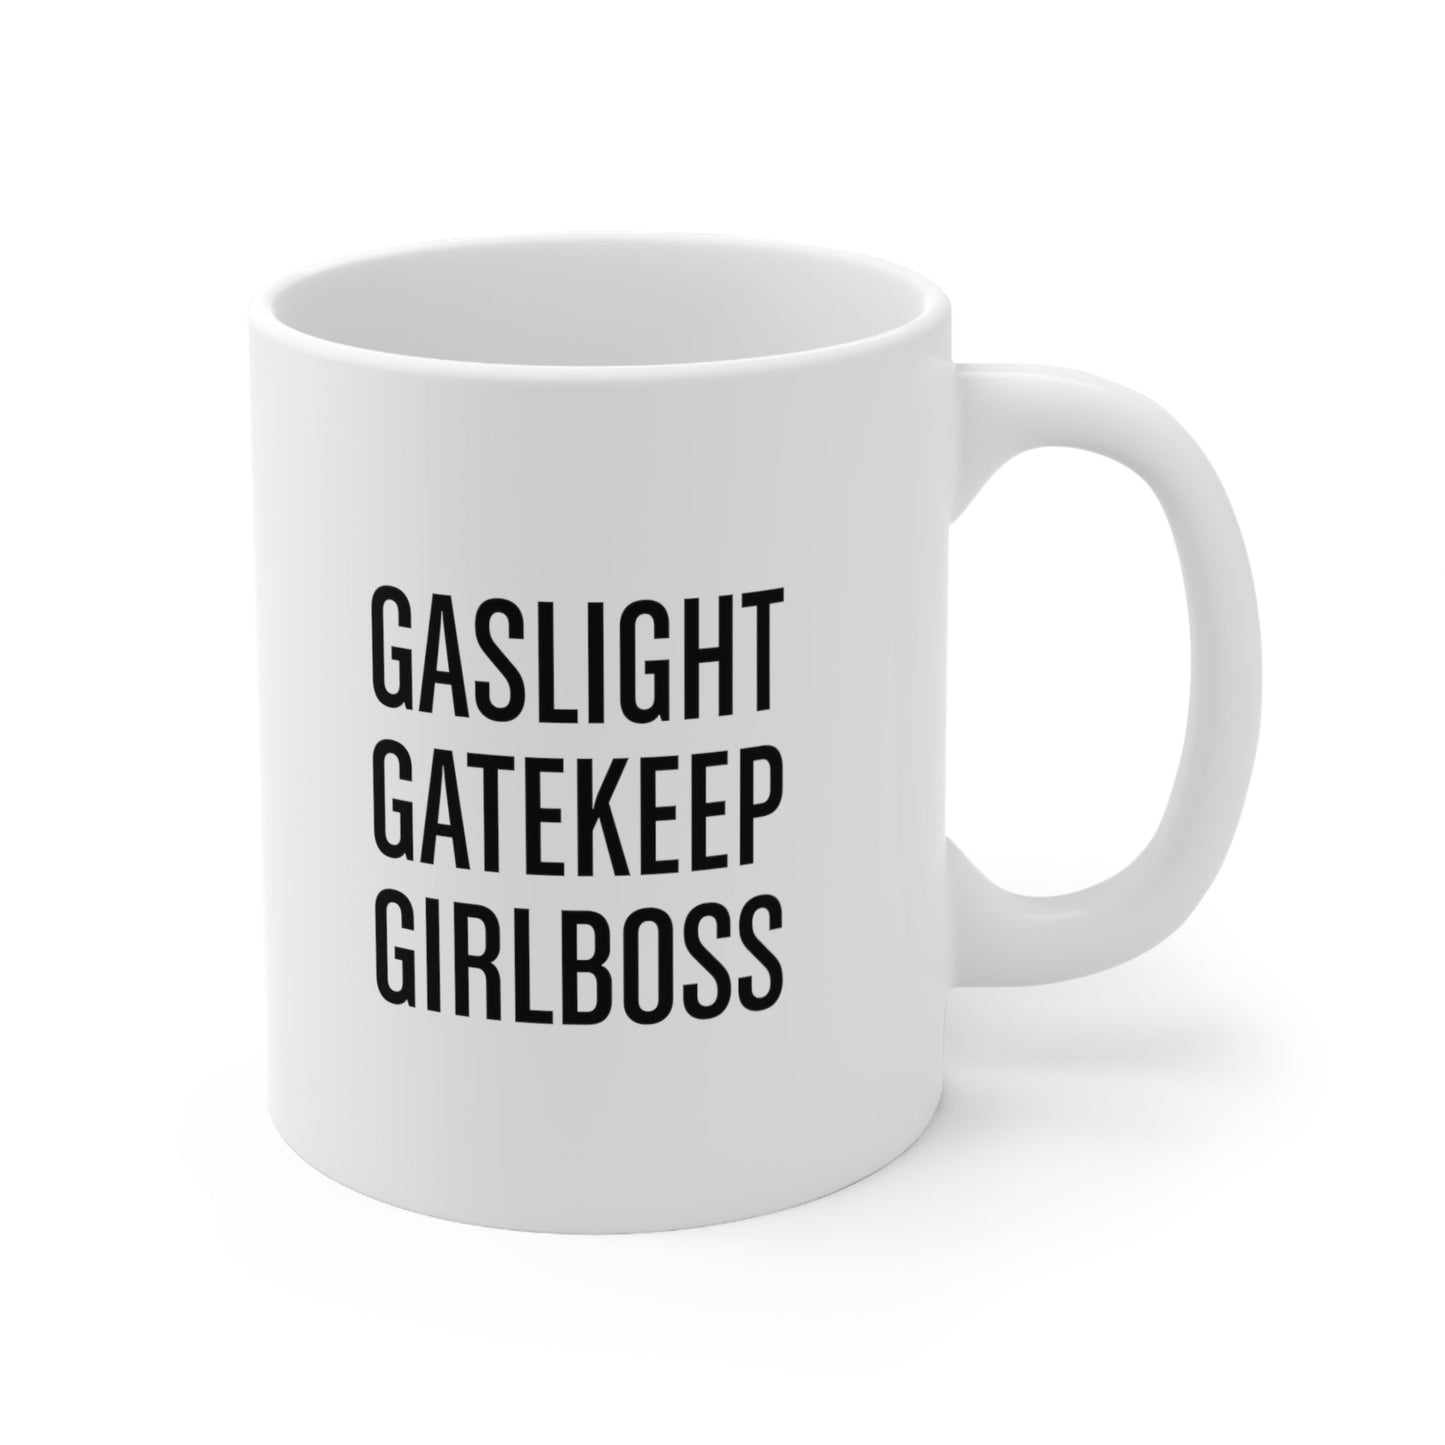 Gaslight Gatekeep Girlboss Coffee Mug 11oz Jolly Mugs